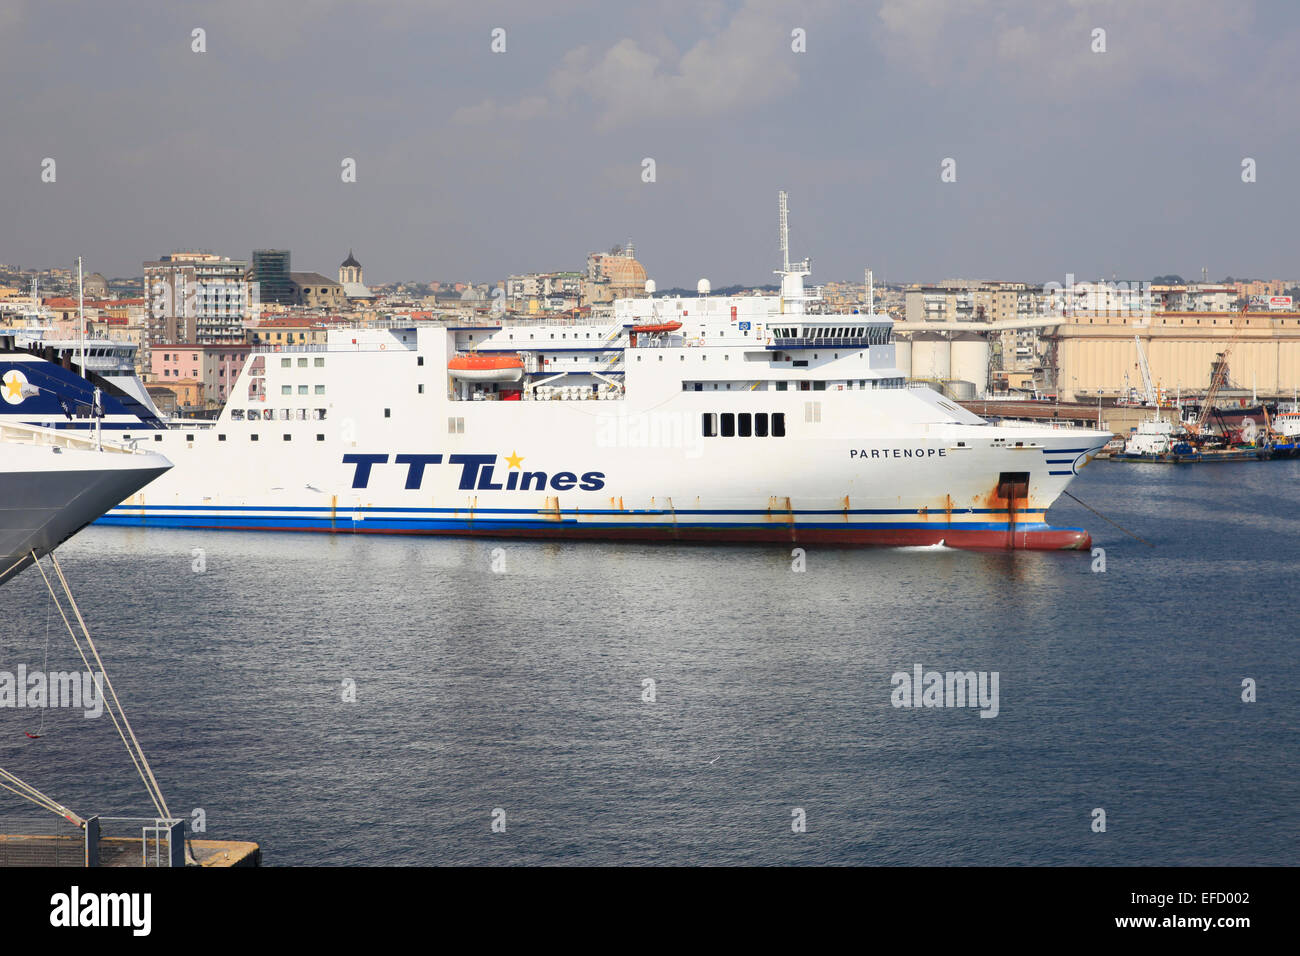 RoRo ferry Partenope Stock Photo